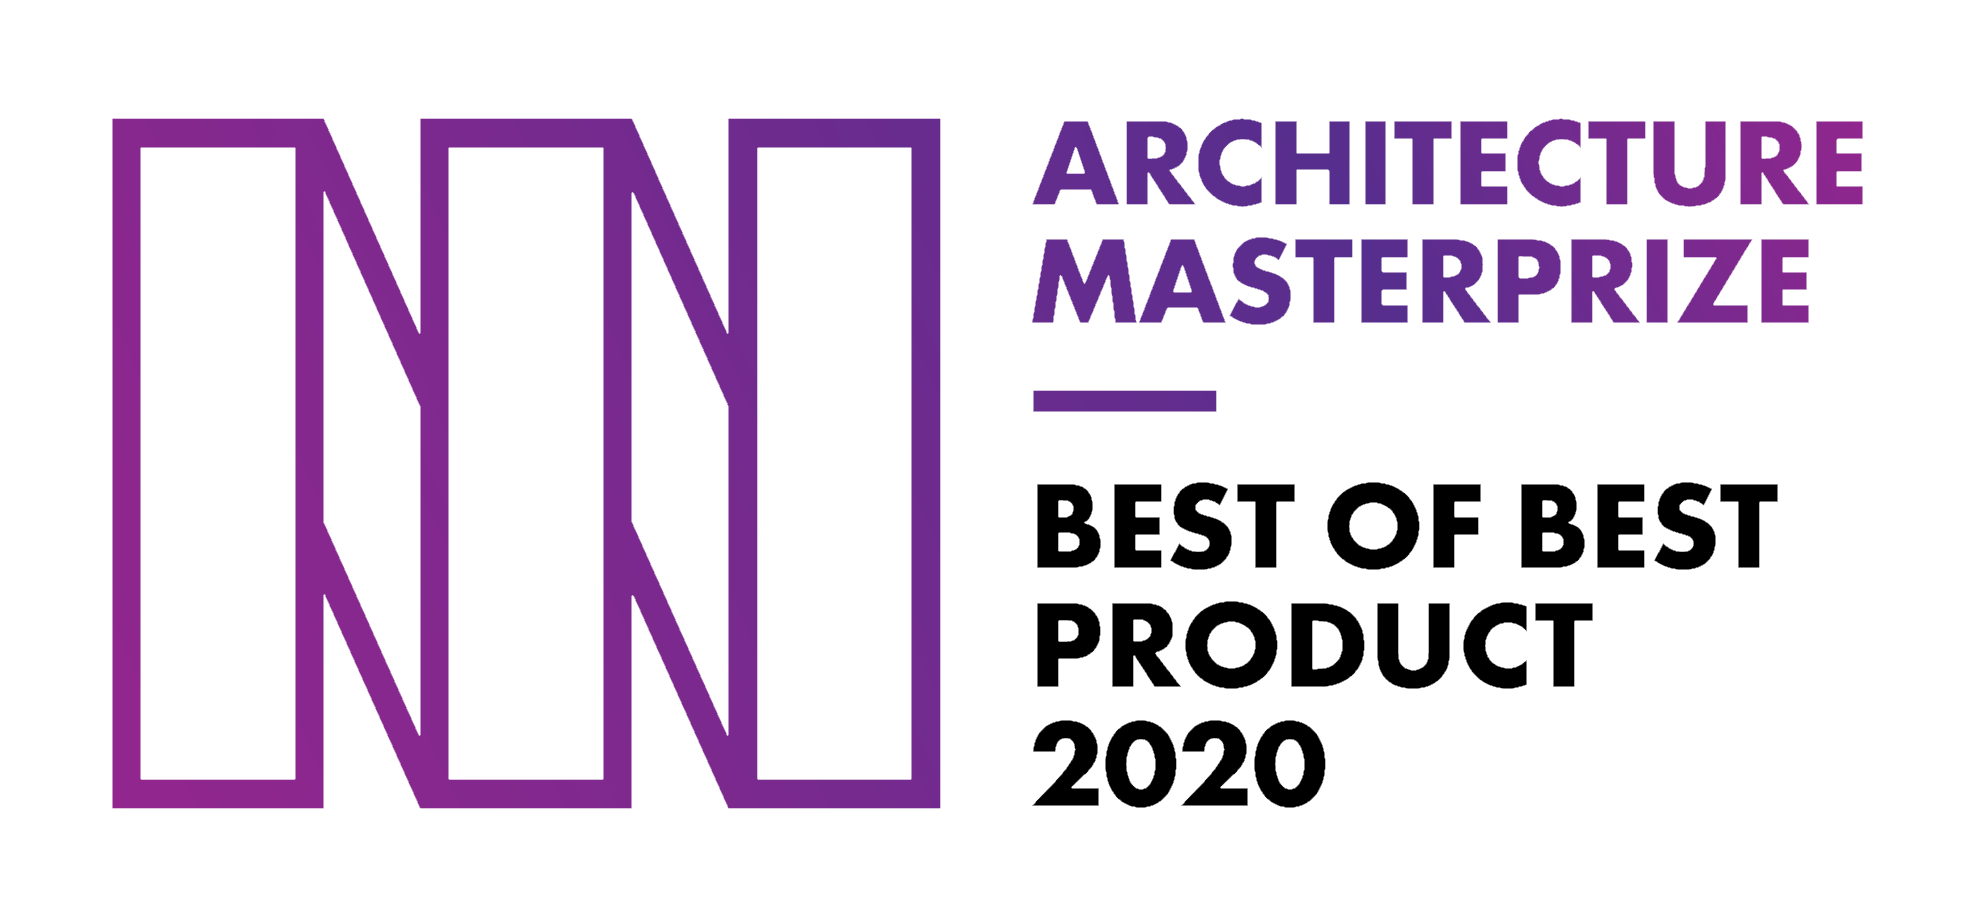 Arch Masterprize logo